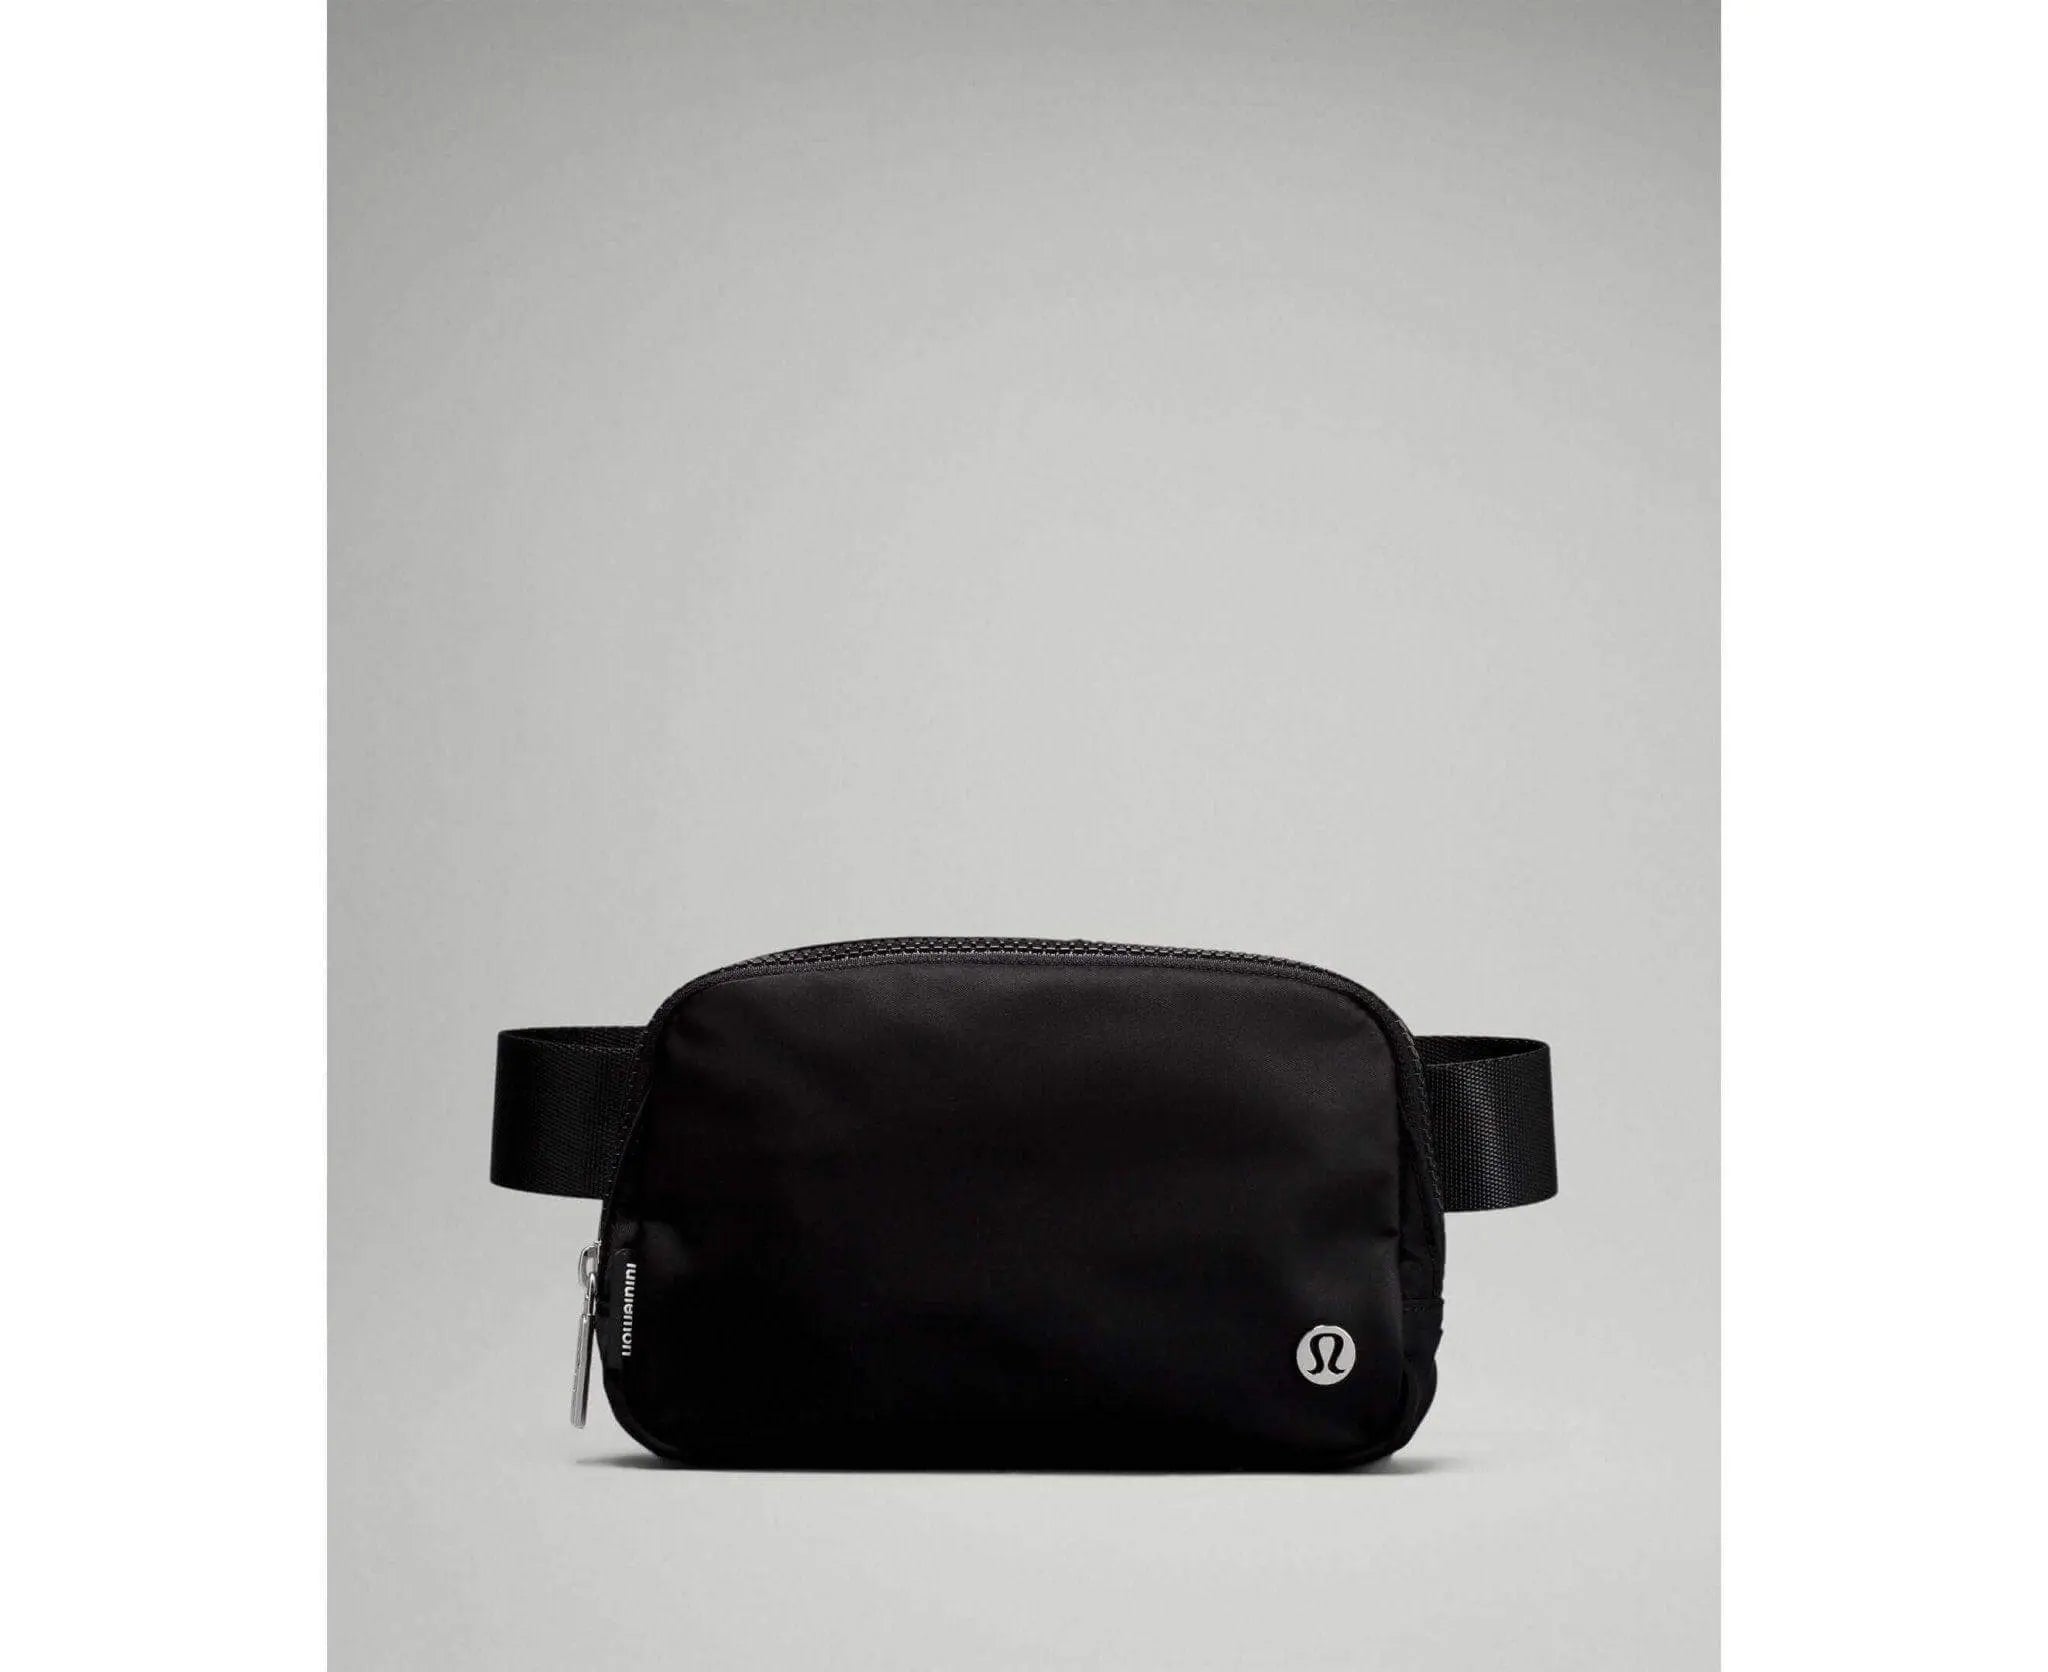 Lululemon Everywhere Belt Bag 1L-black color free shipping